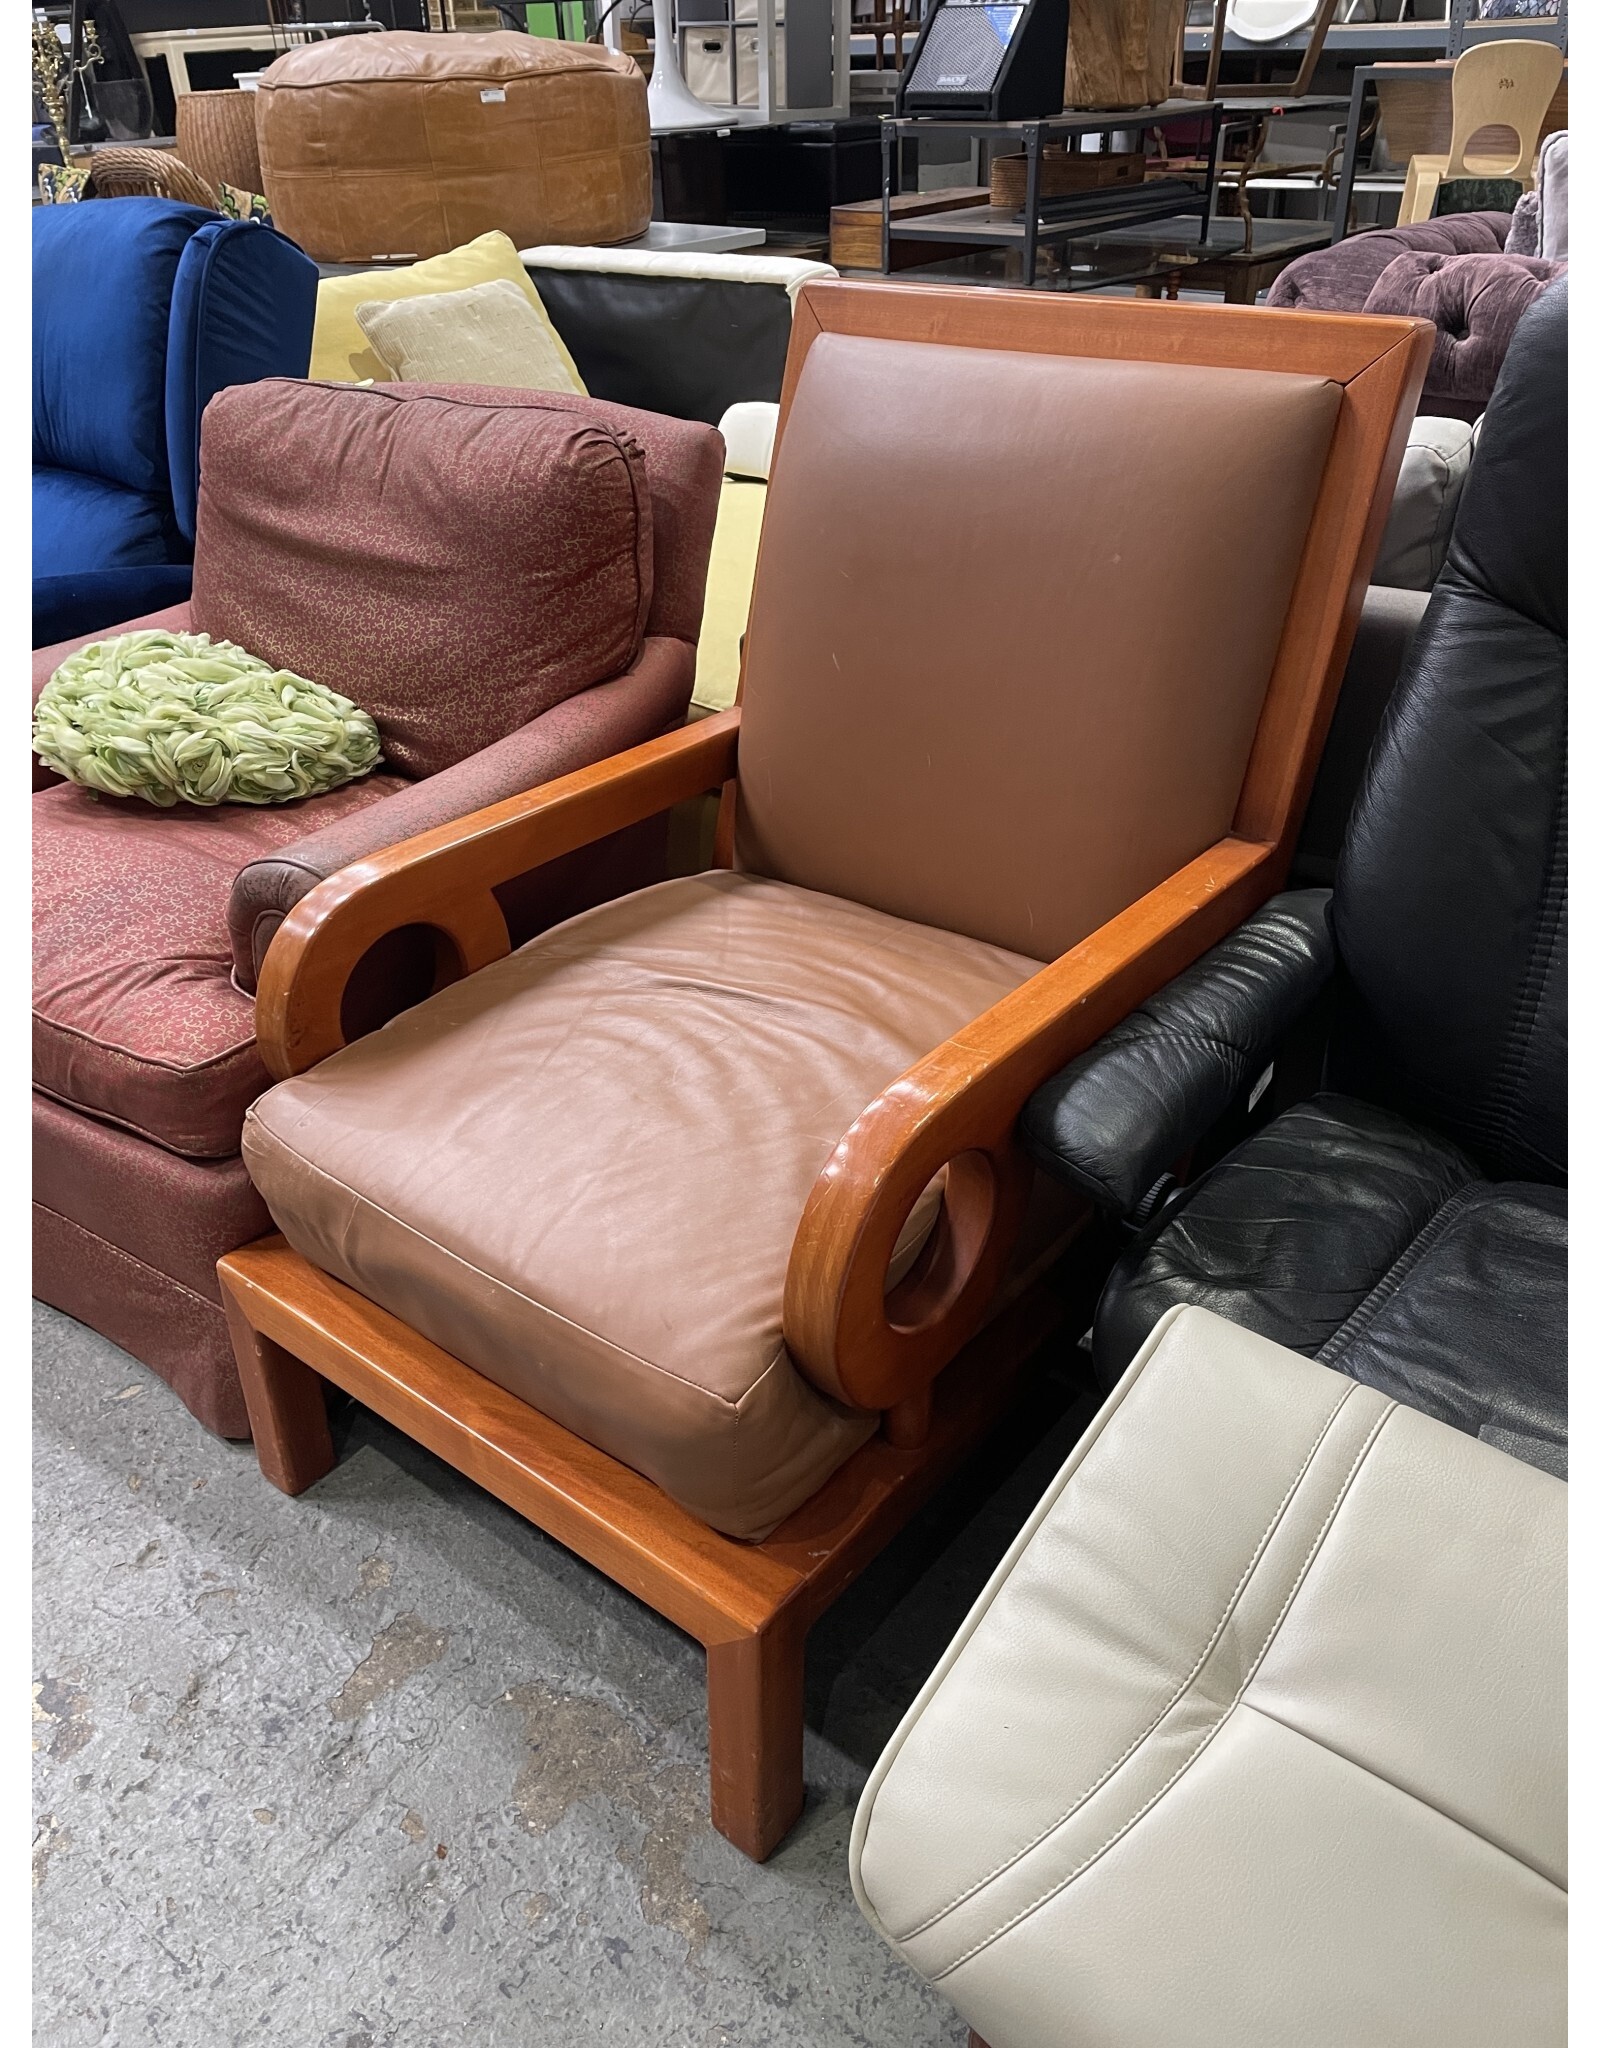 Art Deco Style Mahogany Wood Arm Chair